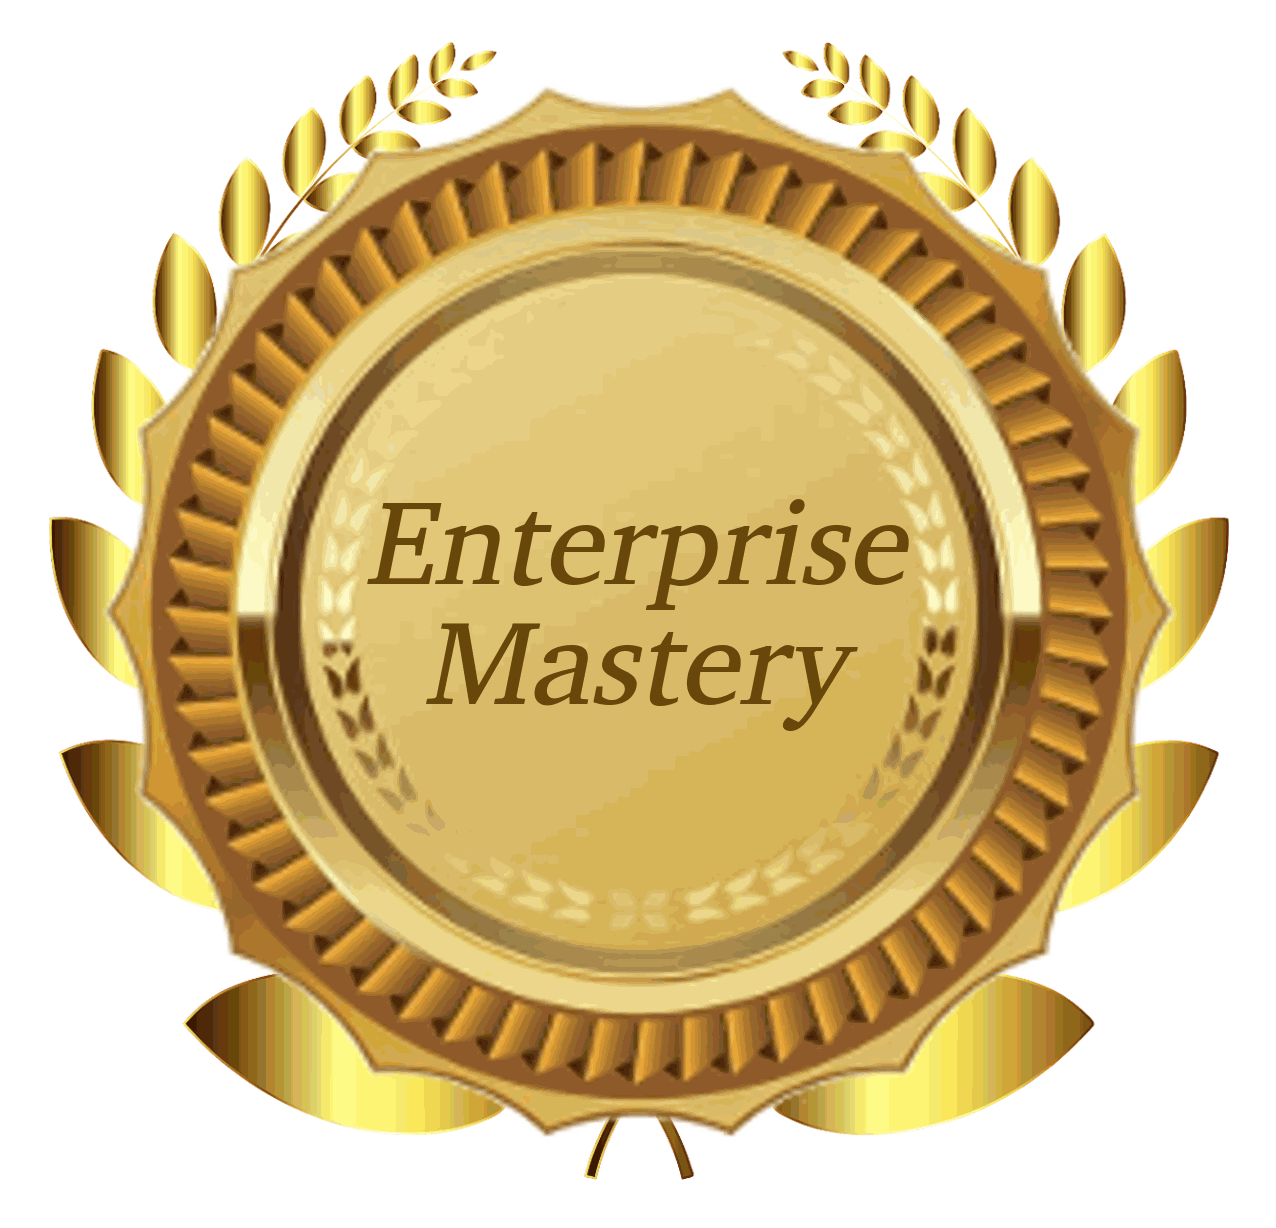 Enterprise Mastery 